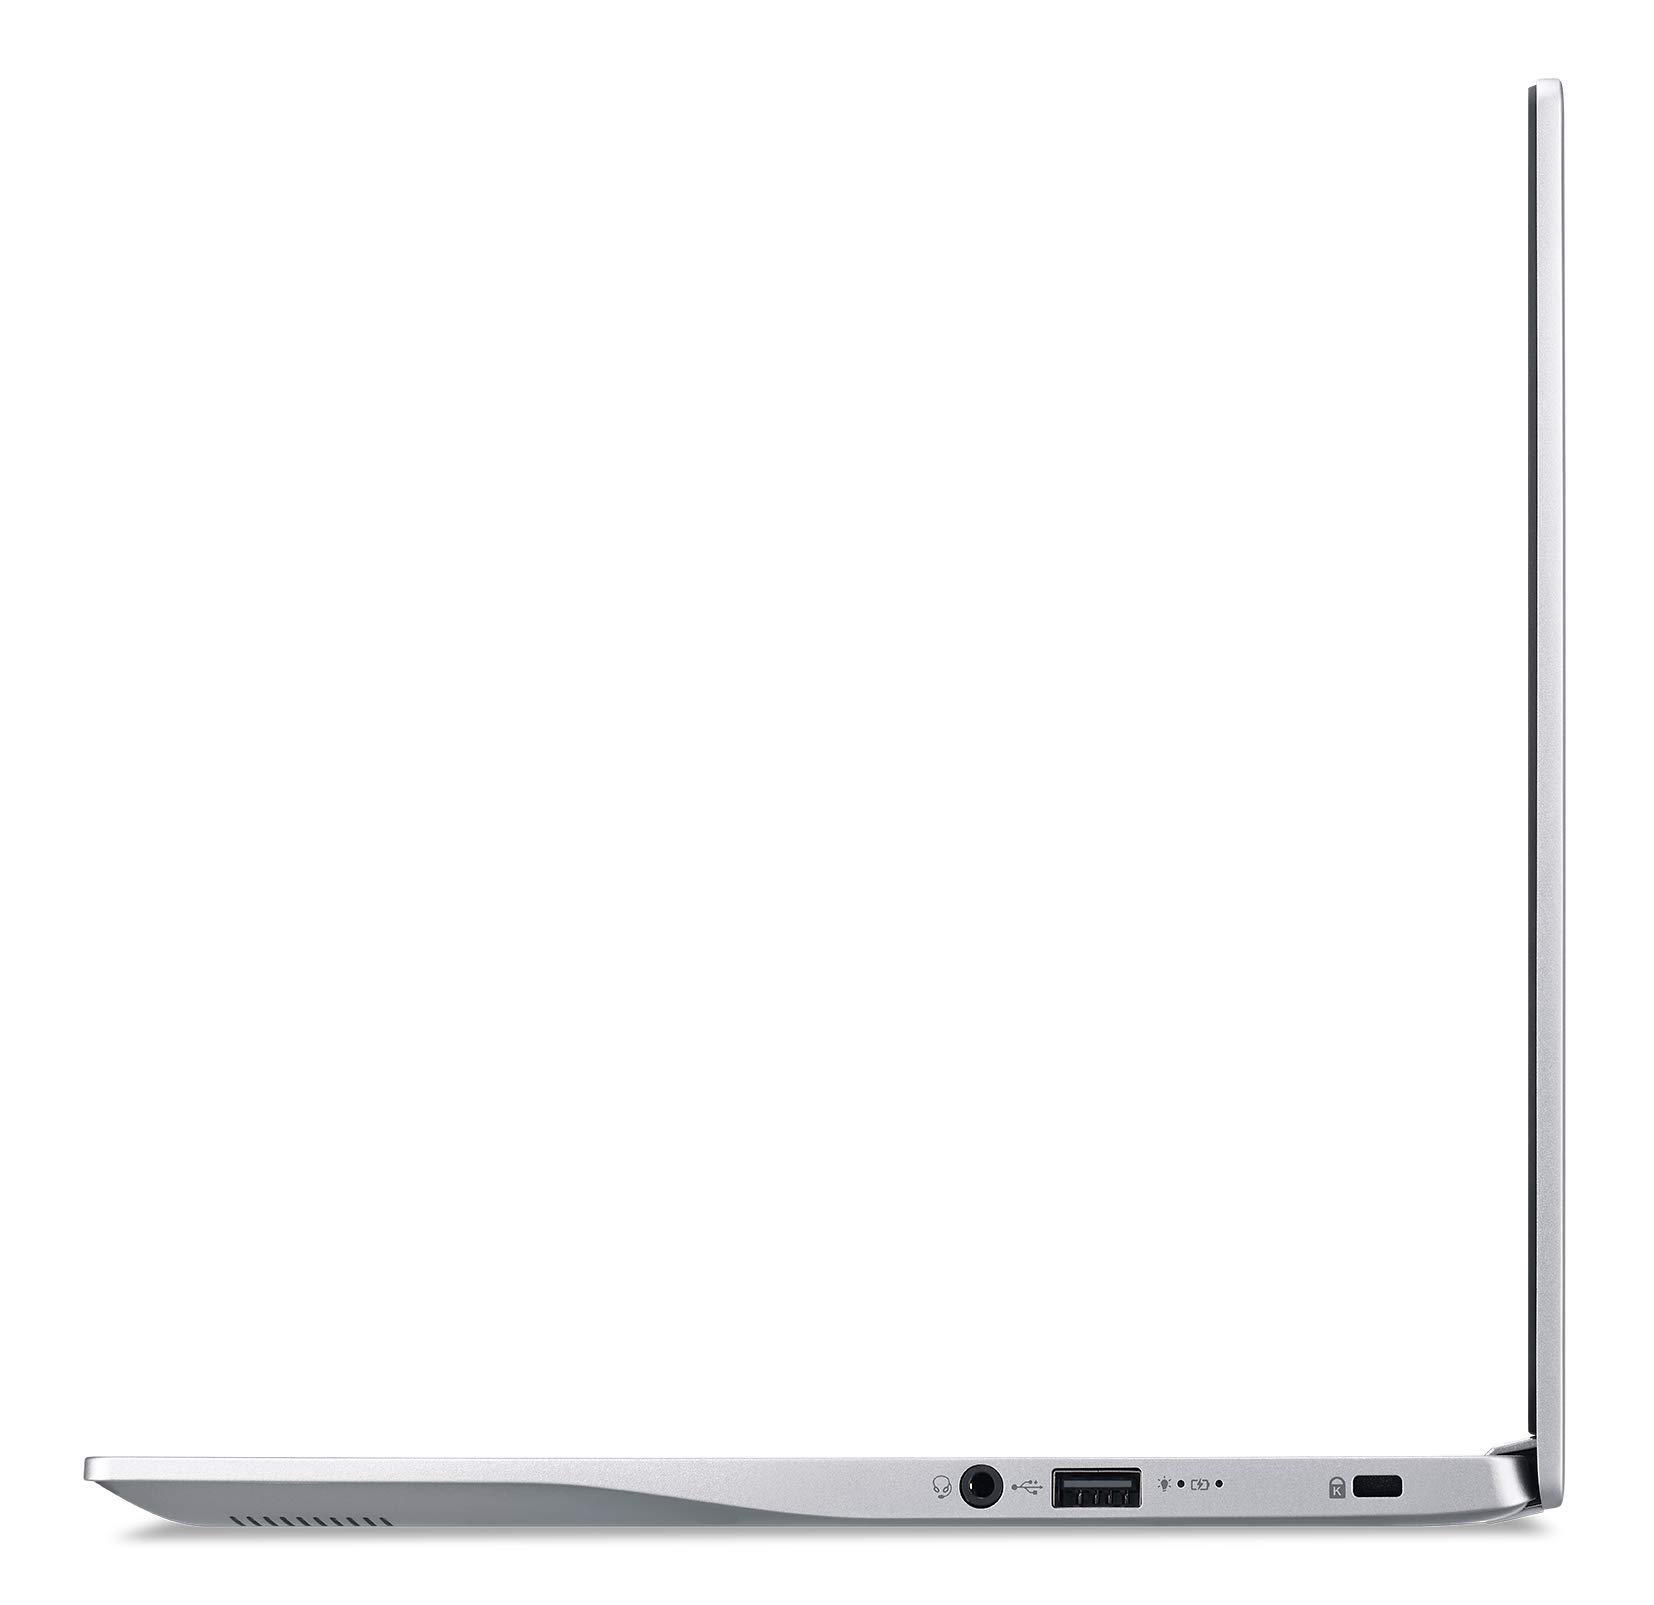 Acer Swift 3 Intel Evo Thin & Light Laptop, 14